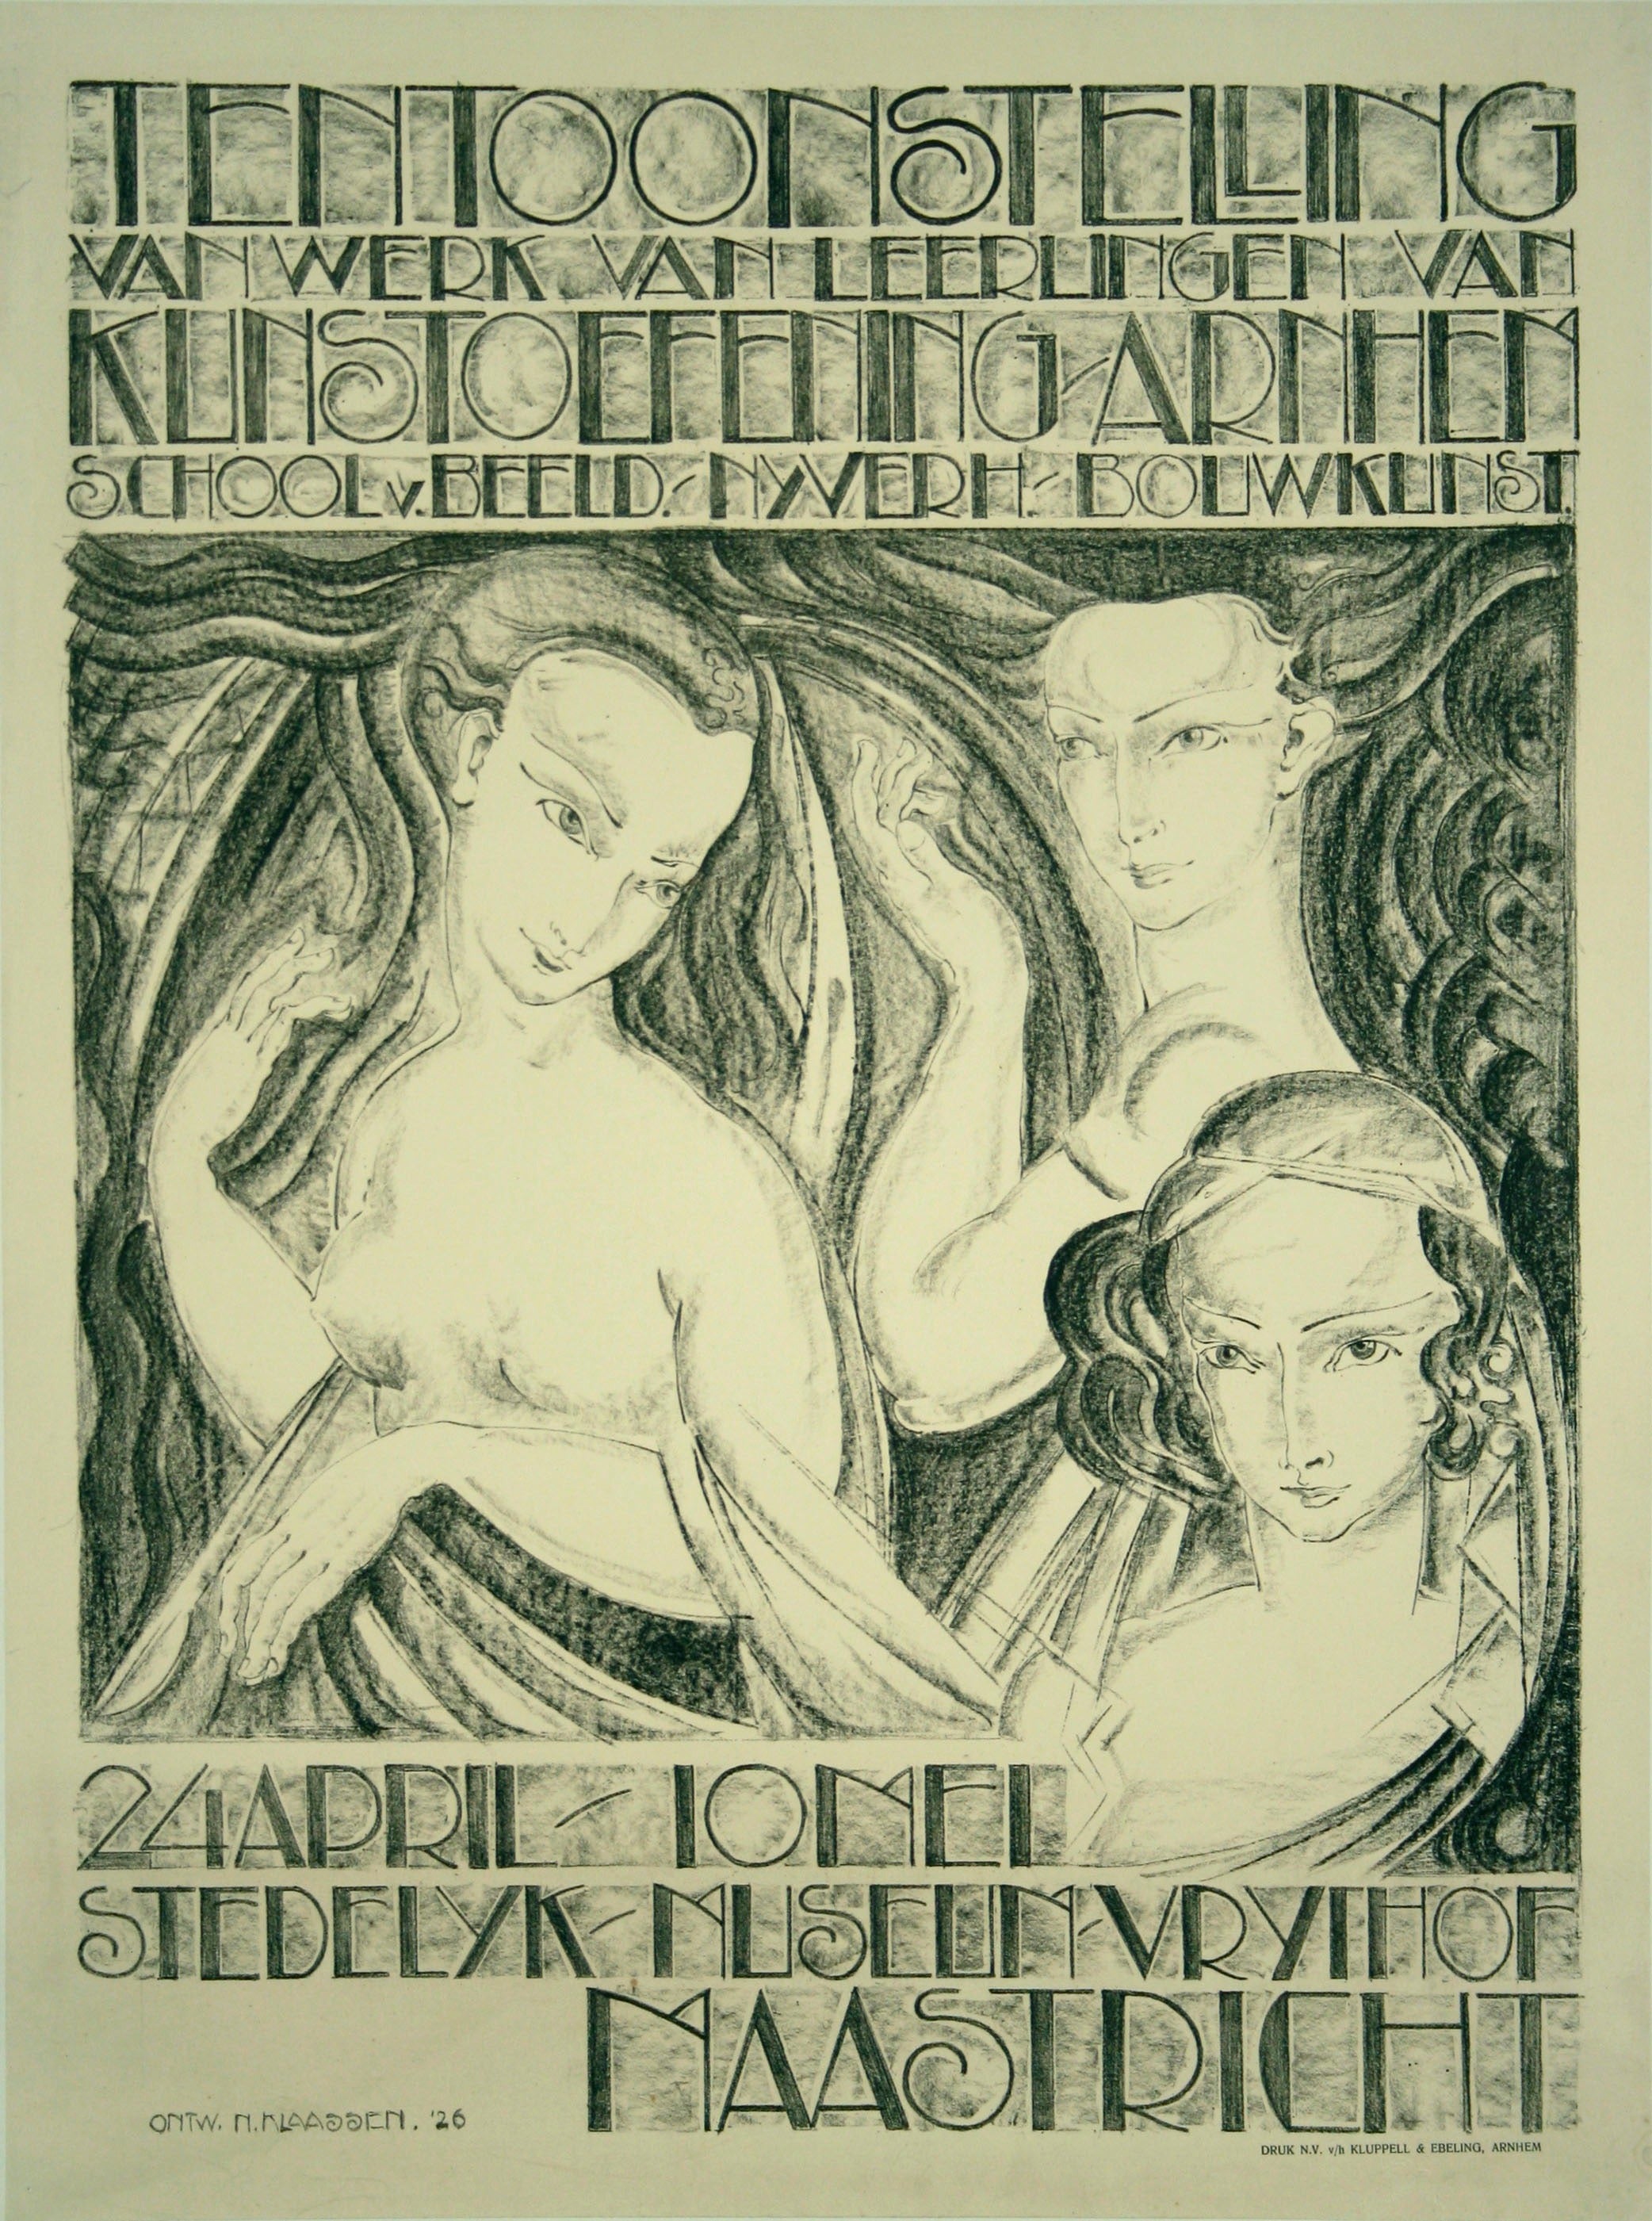 Dutch Art Deco Period Art Exhibition Poster by Klaassen, 1926 For Sale